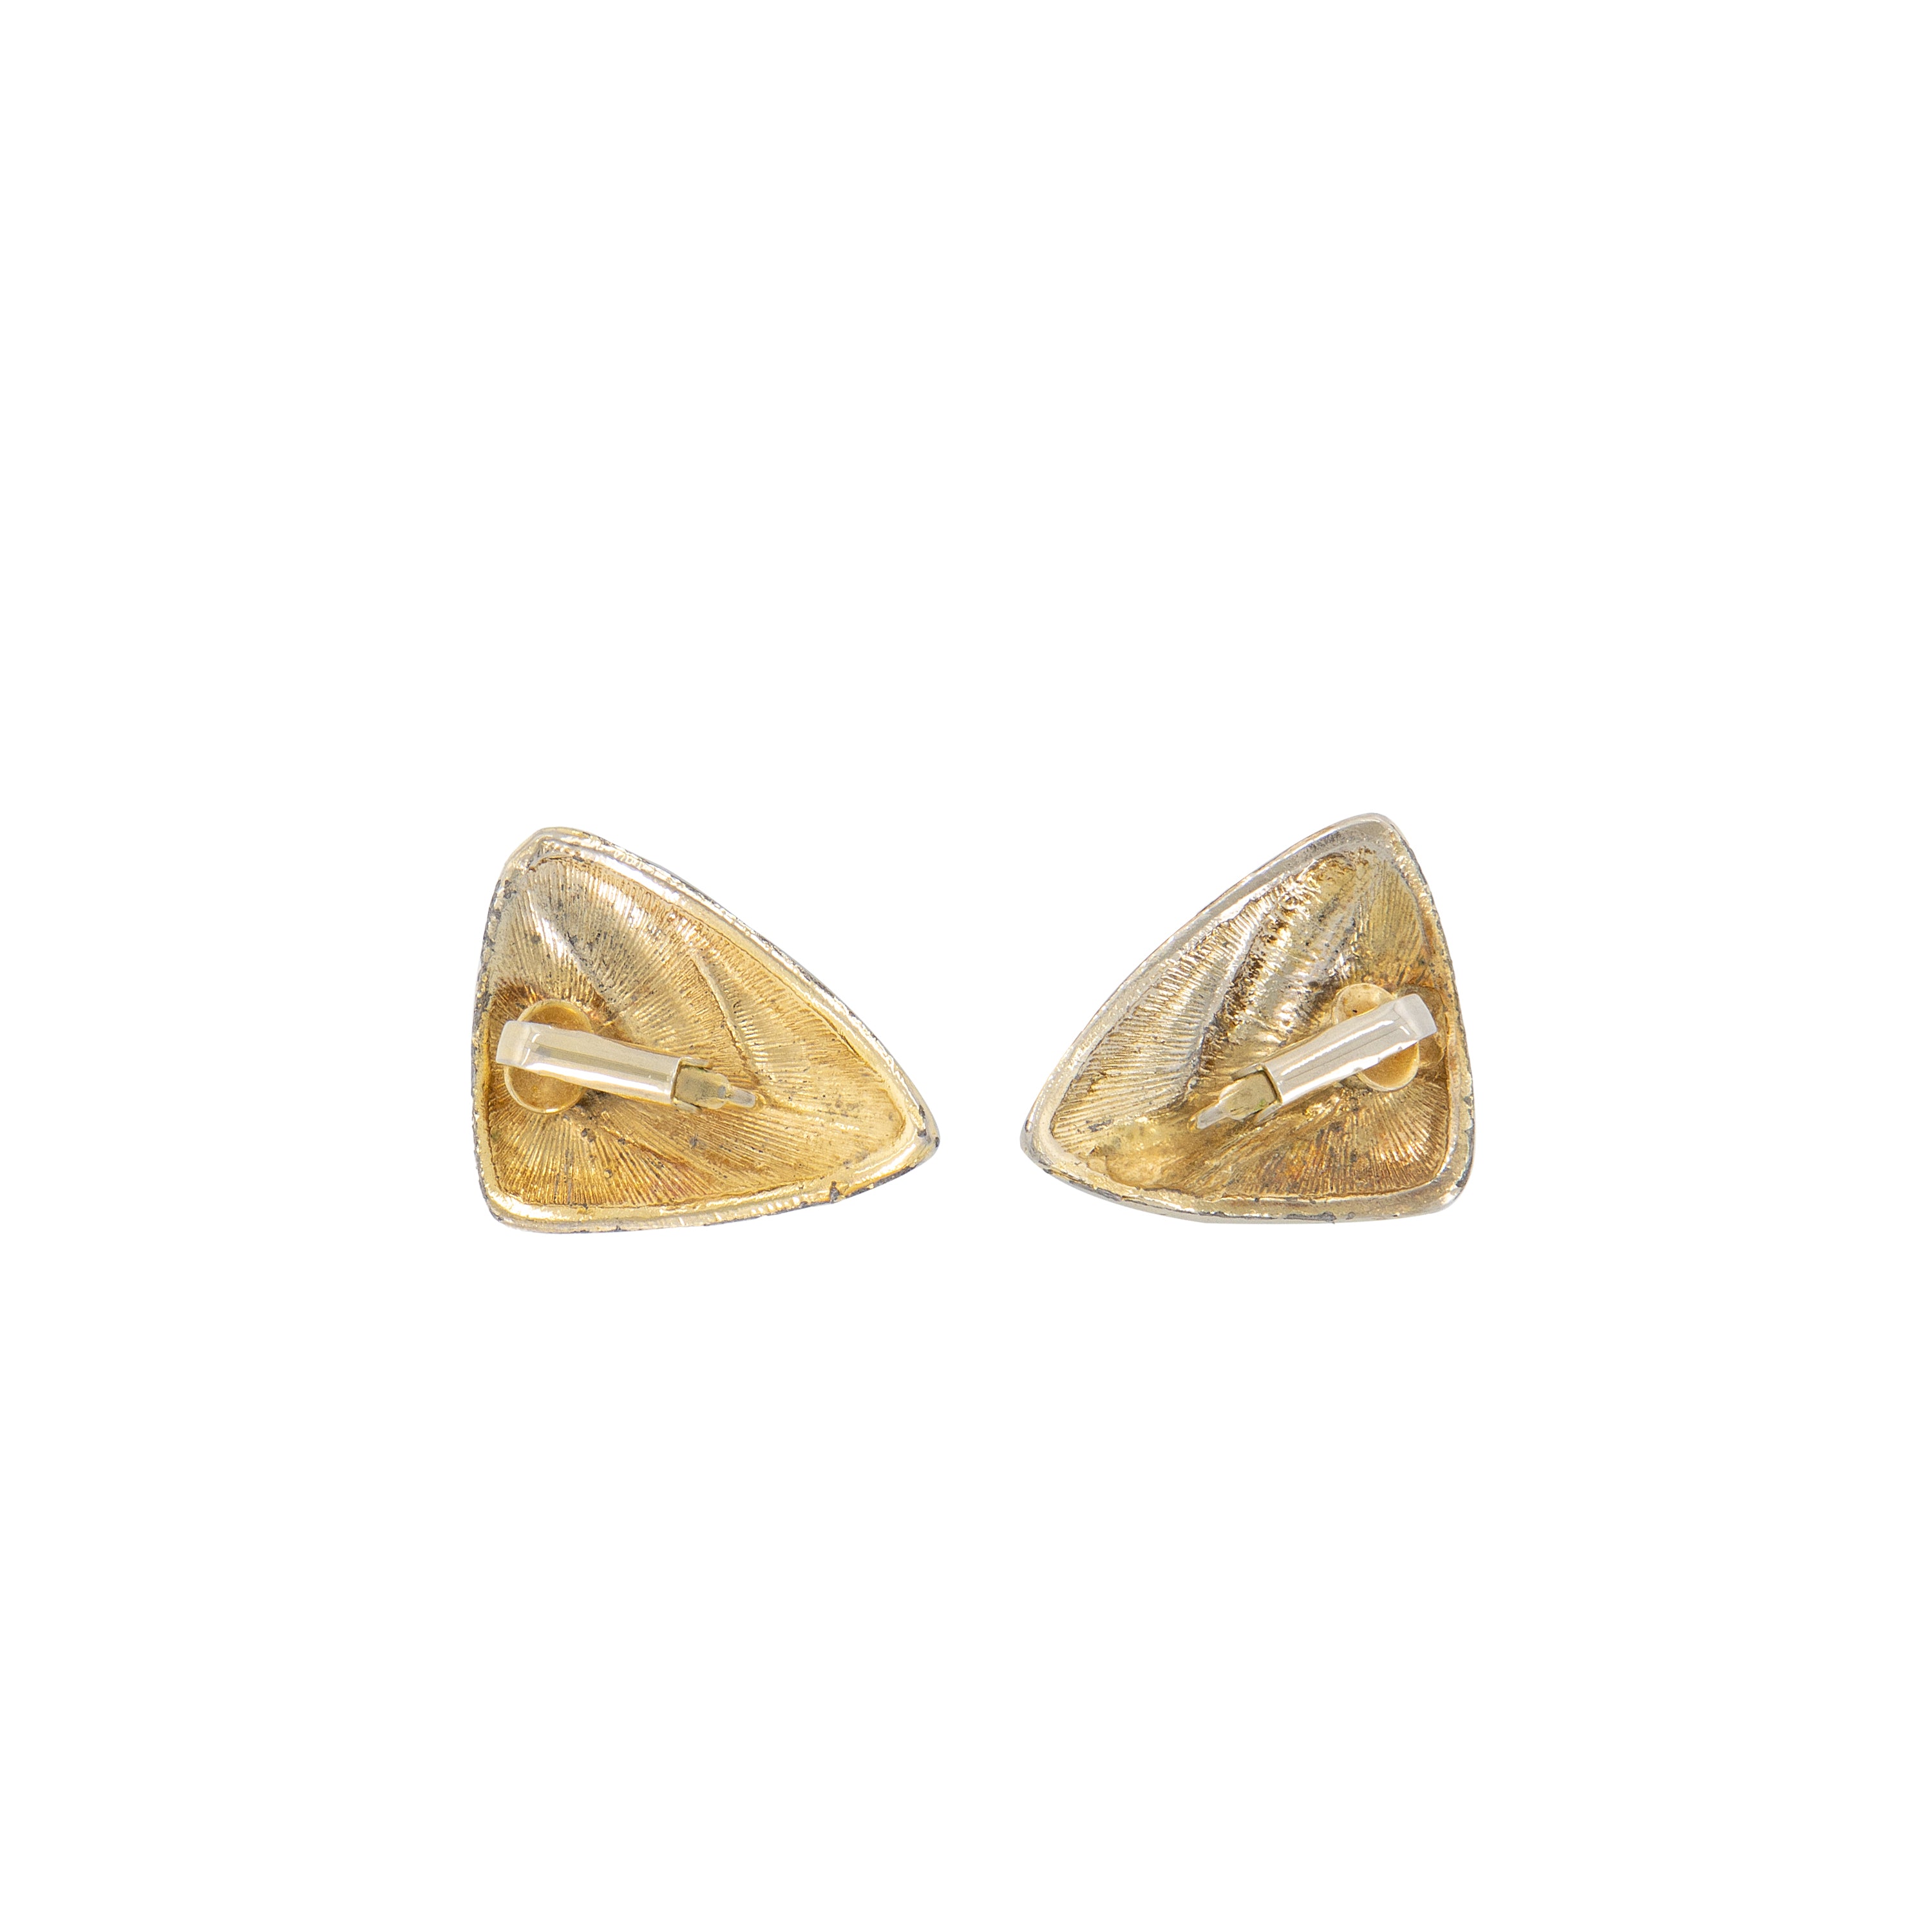 Closure side of vintage geometric clip-on earrings